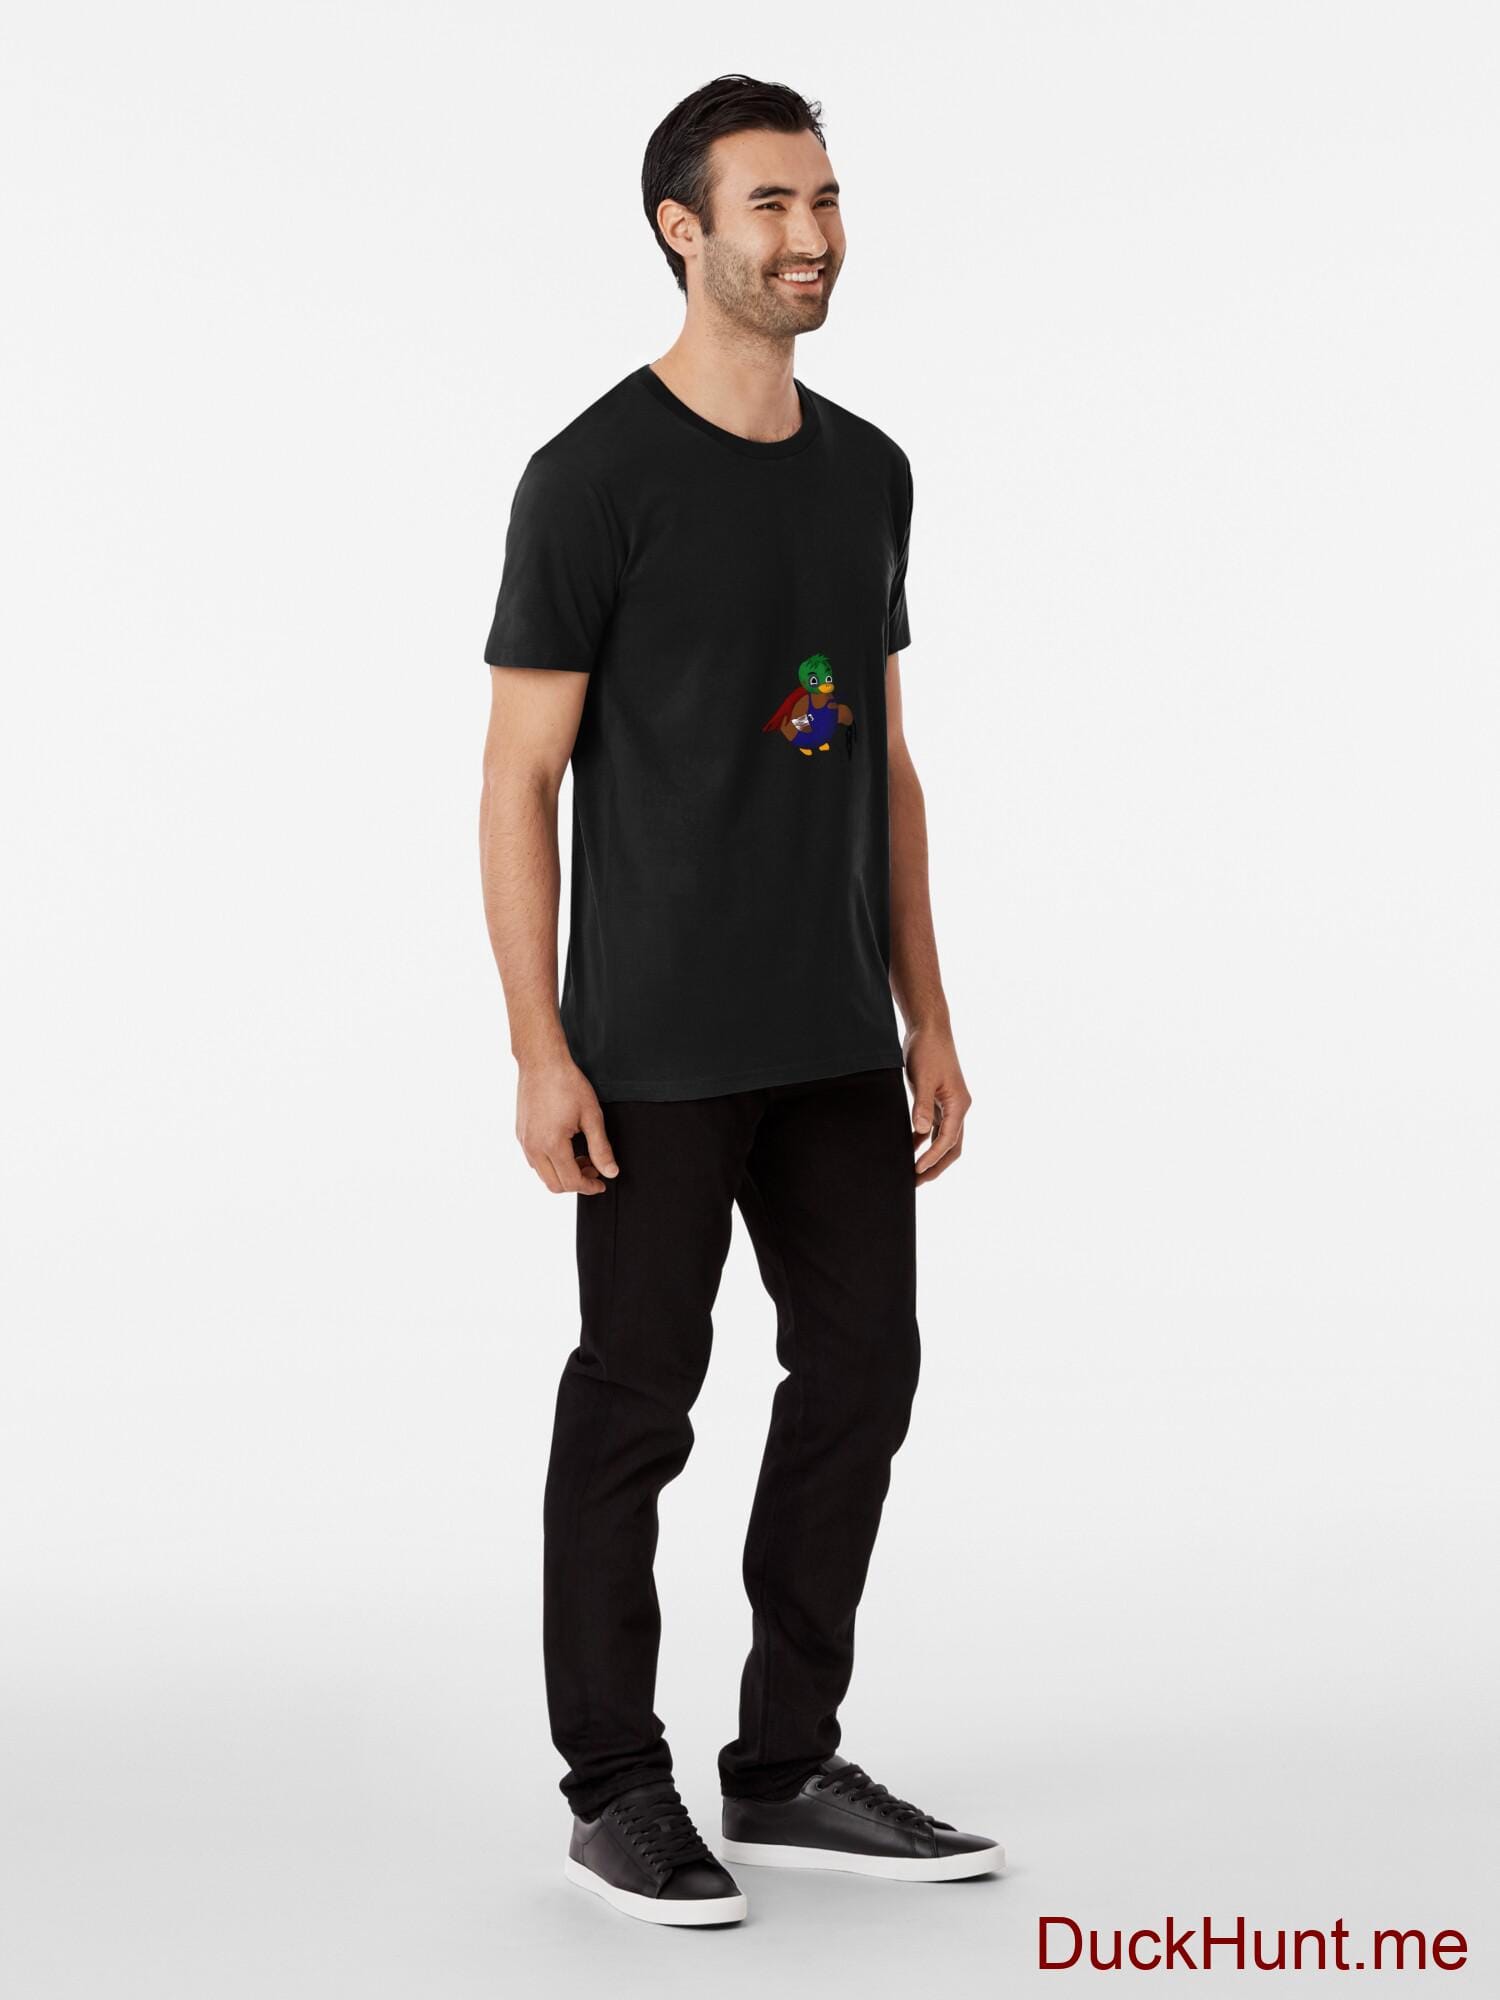 Dead DuckHunt Boss (smokeless) Black Premium T-Shirt (Front printed) alternative image 2